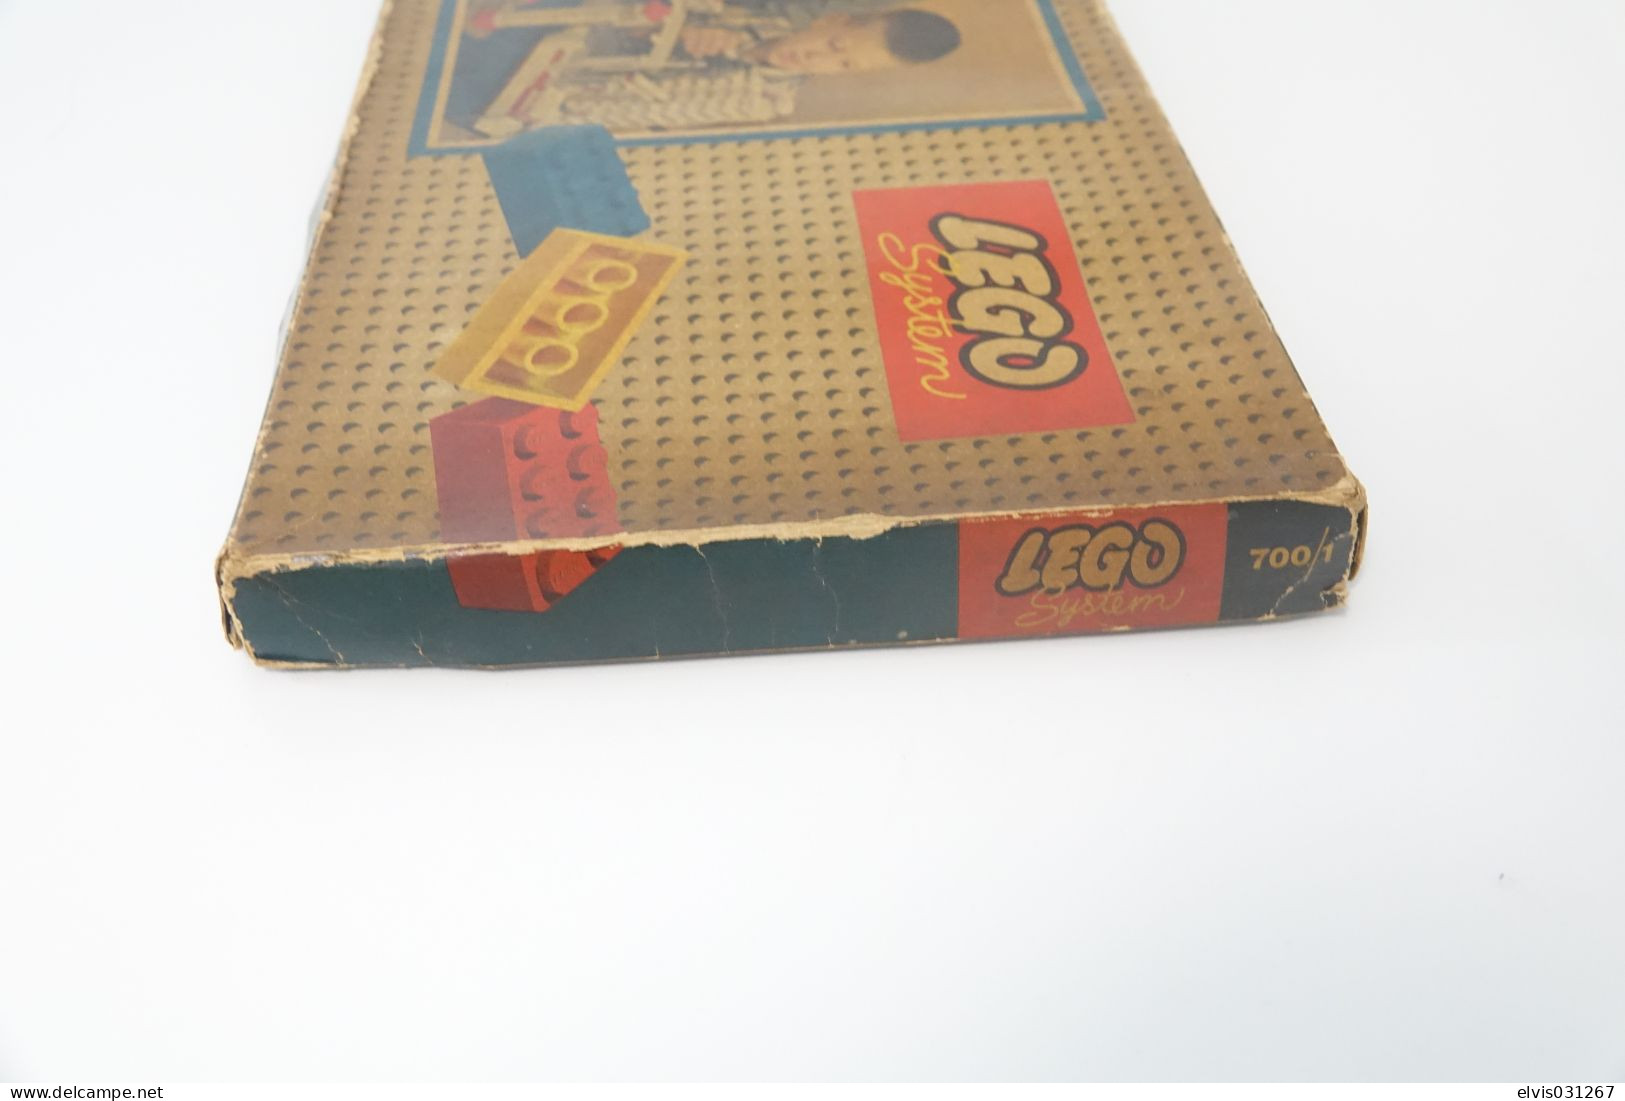 LEGO - 700/1 Gift Package (Lego Mursten) Extremely Rare 1st Edition - Collector Item - Original Lego 1956 - Vintage - Kataloge